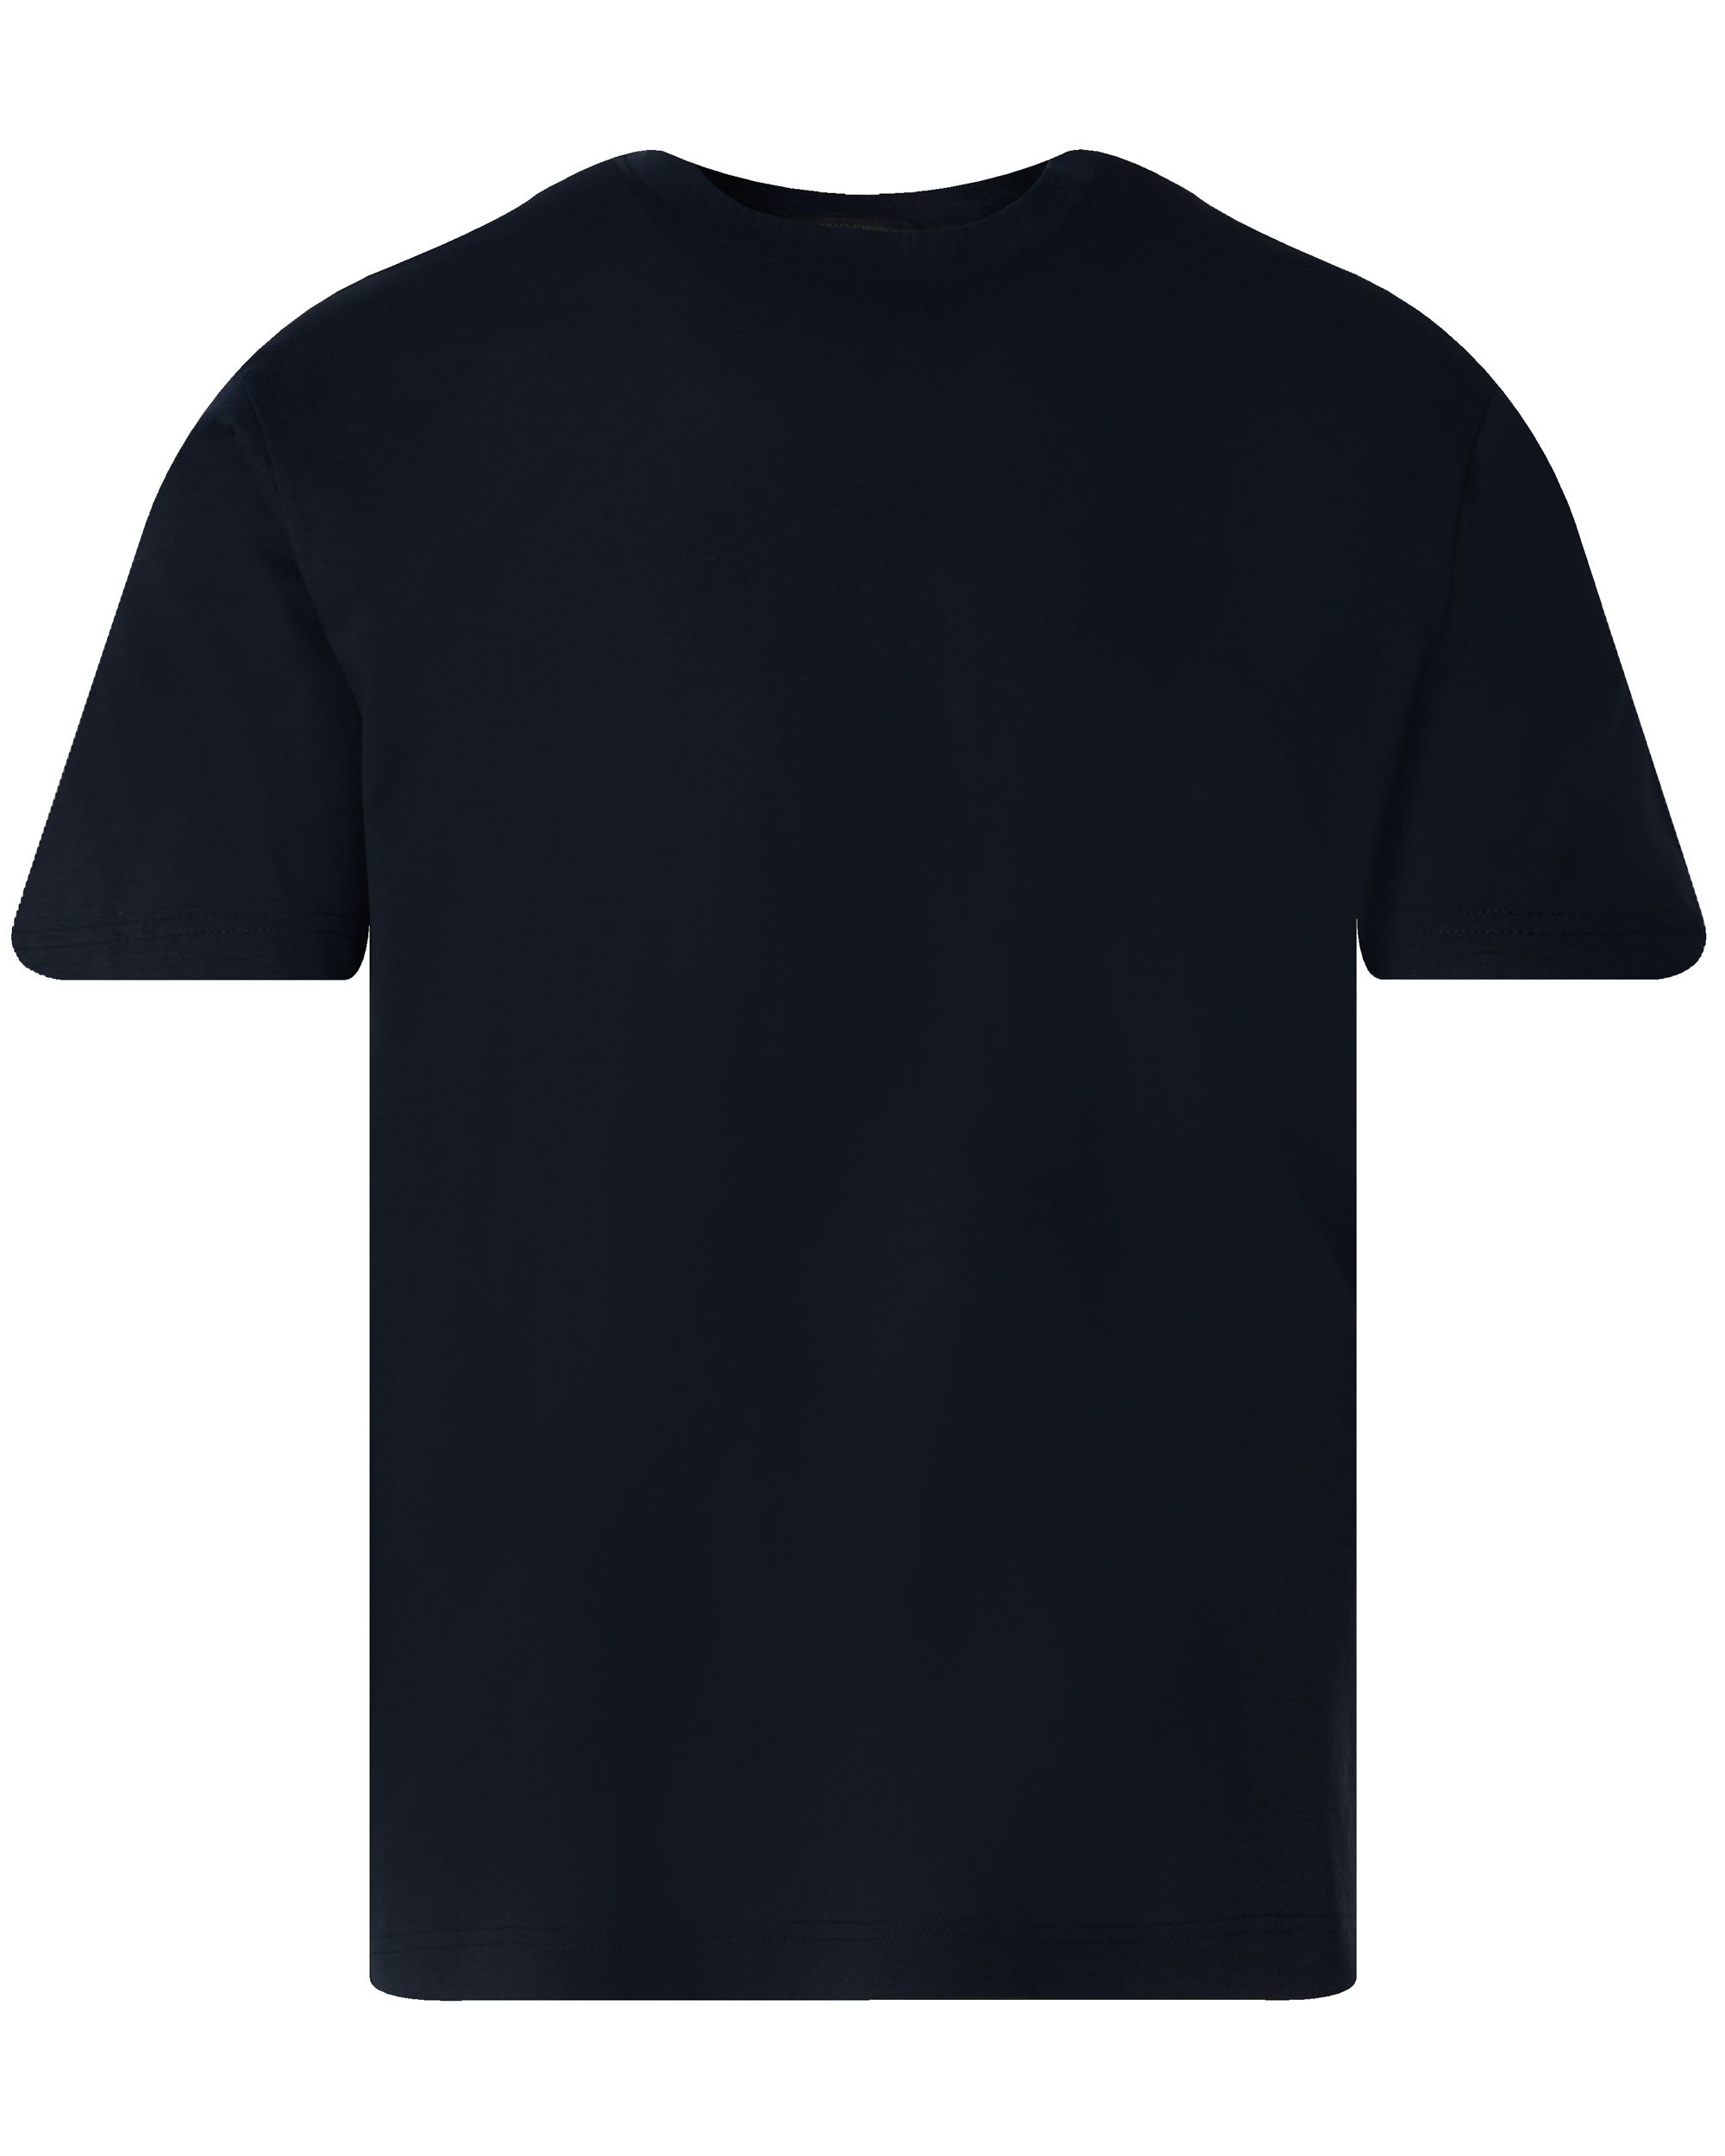 Drykorn Gilberd T-shirt KM Donker blauw 093327-001-L